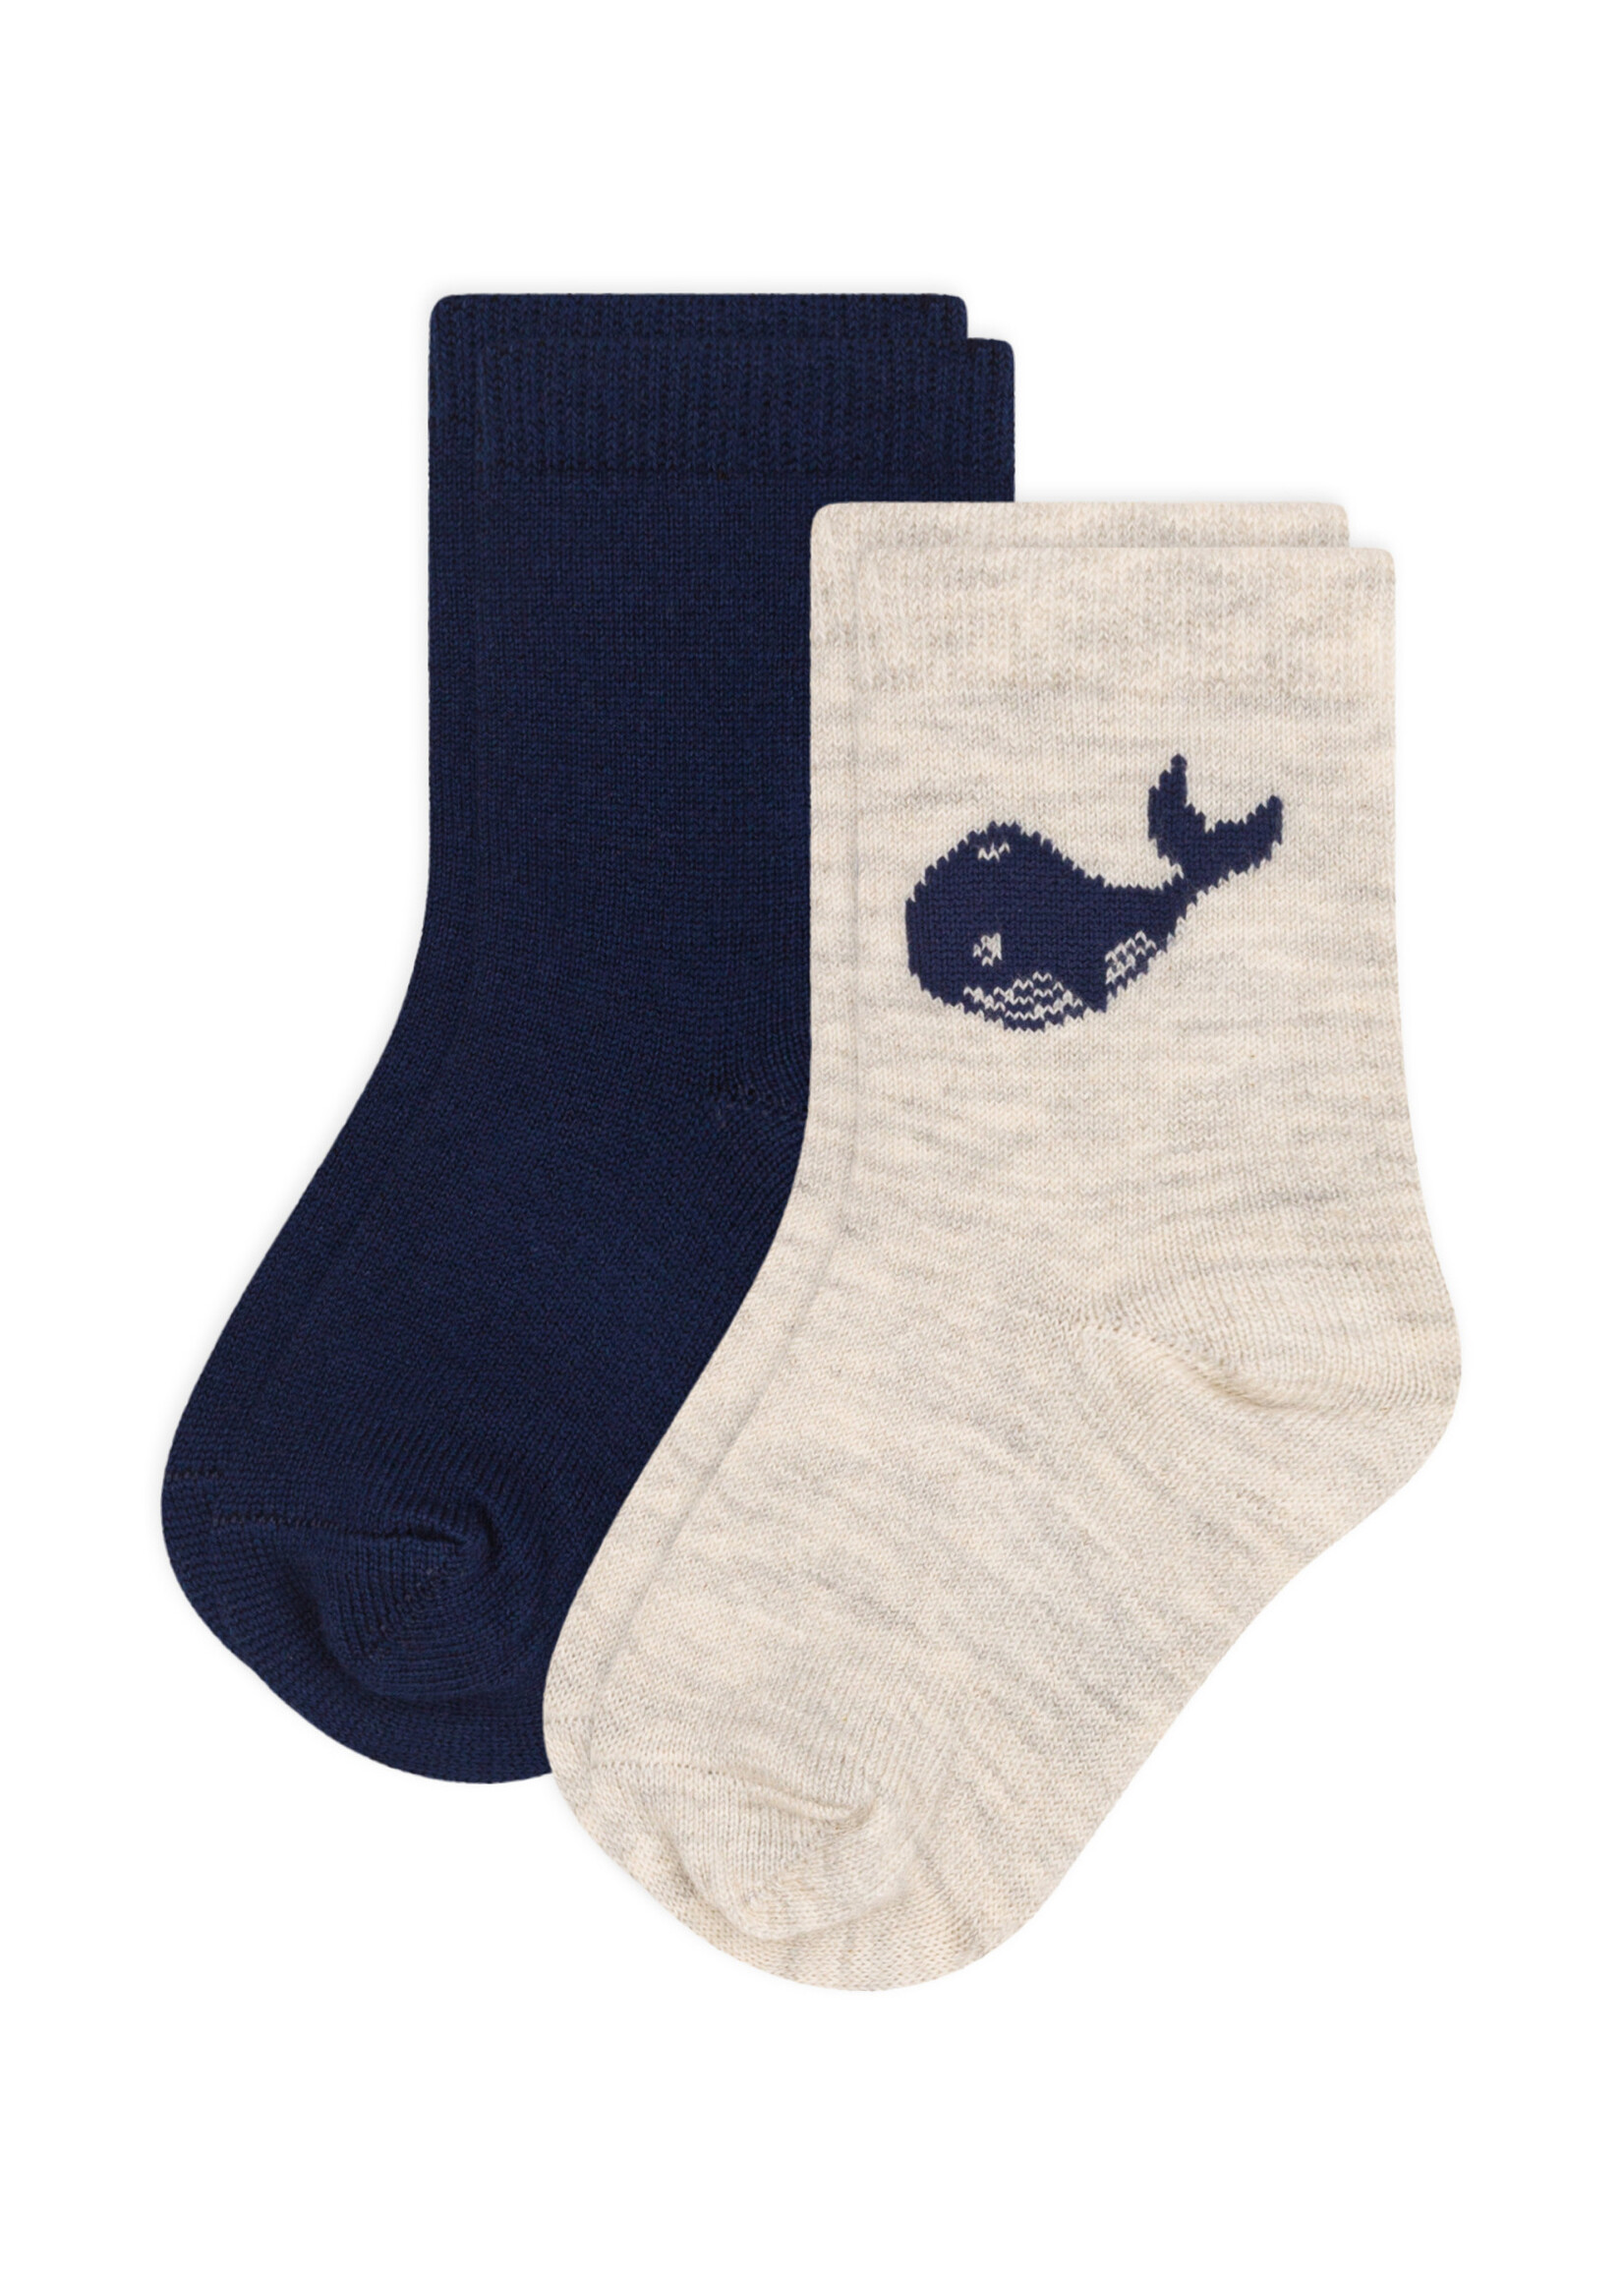 Petit Bateau Set van 2 paar sokken in katoen met walvisje